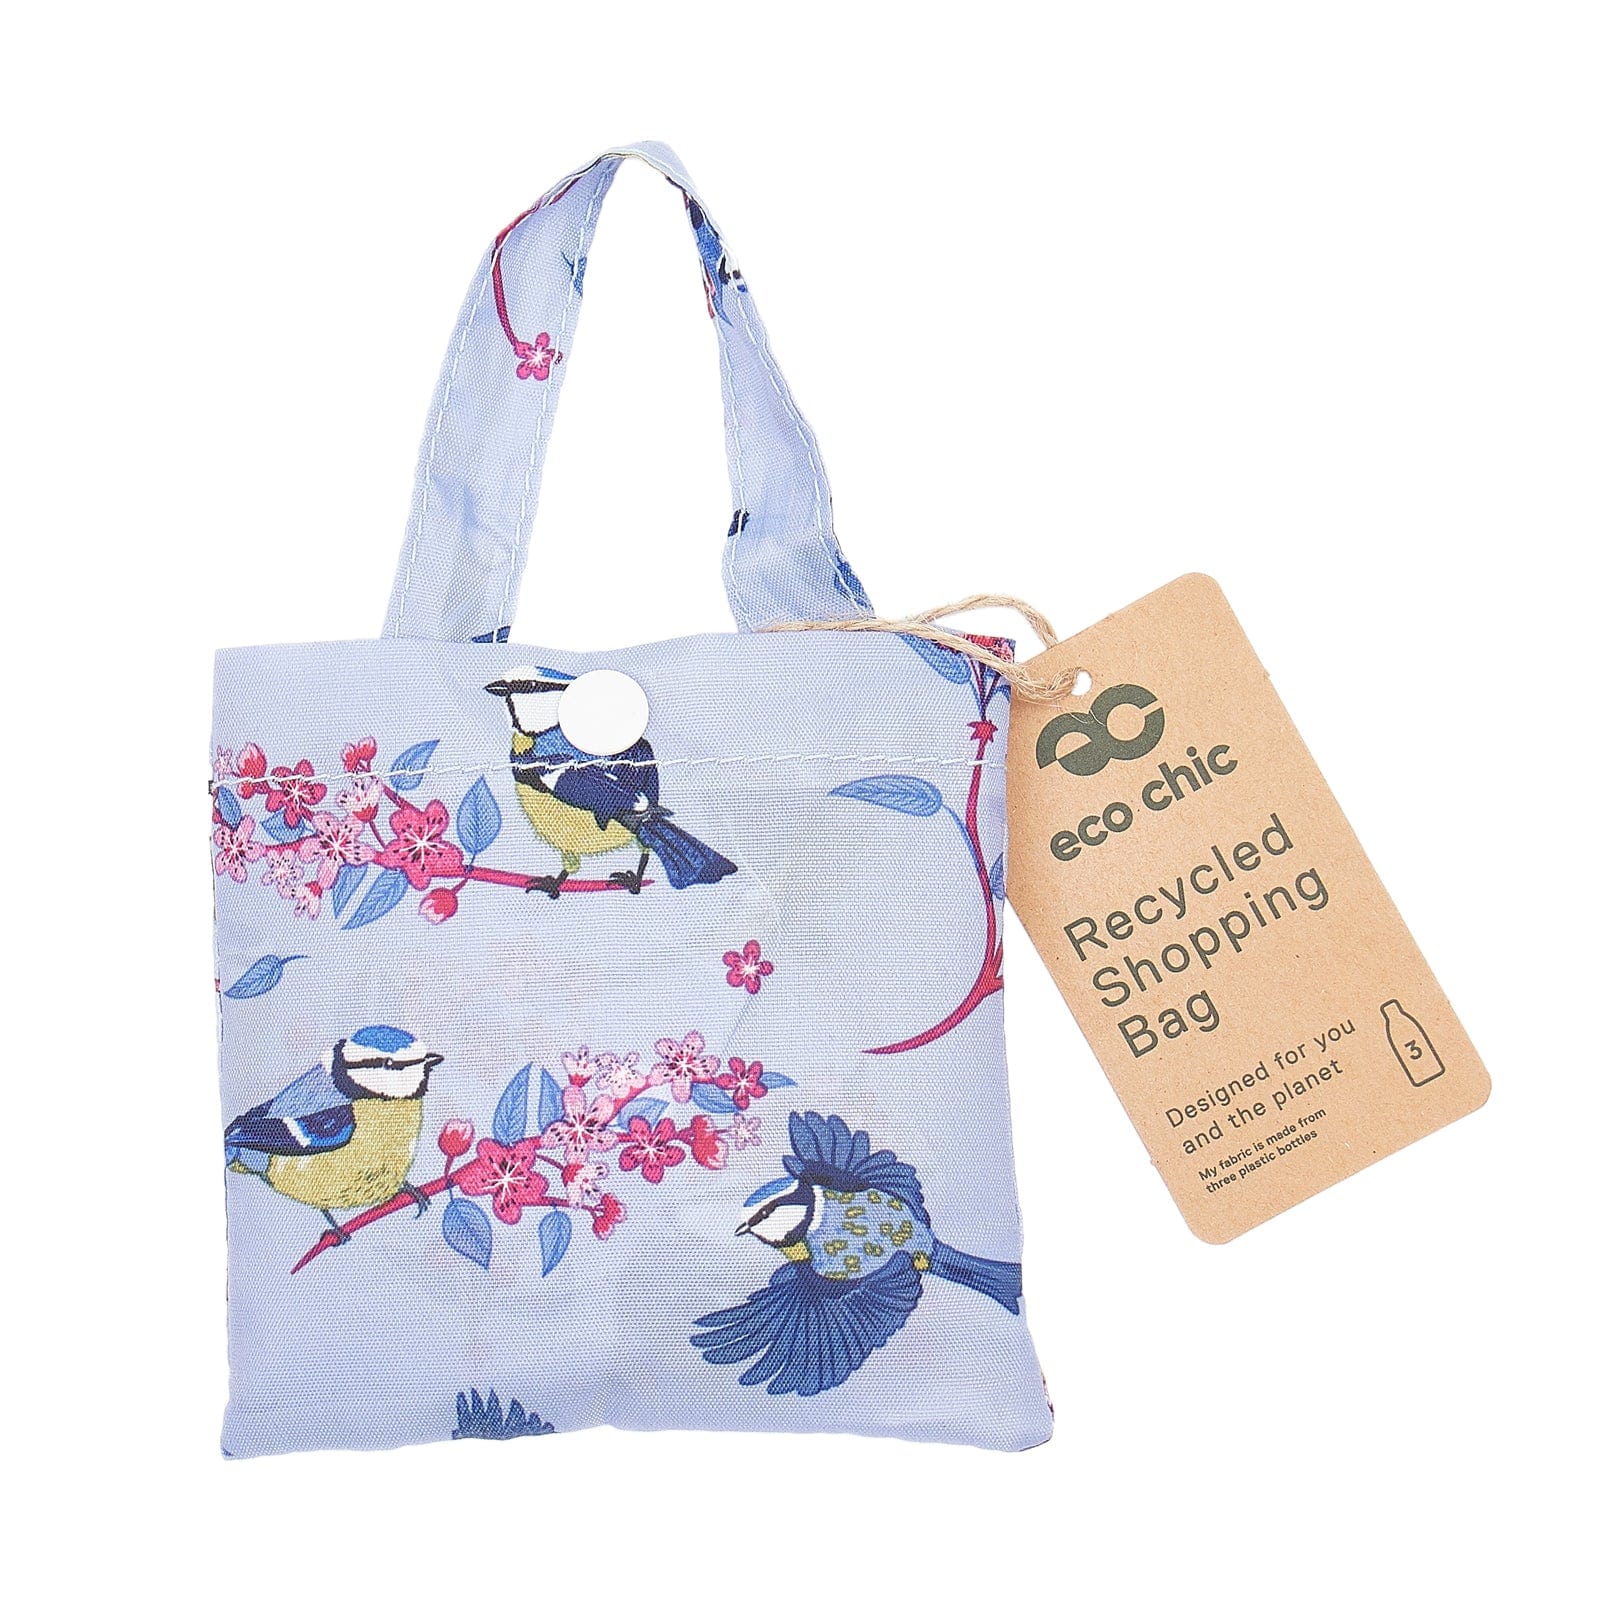 Lunch Bag – Eco Chic Retail Ltd